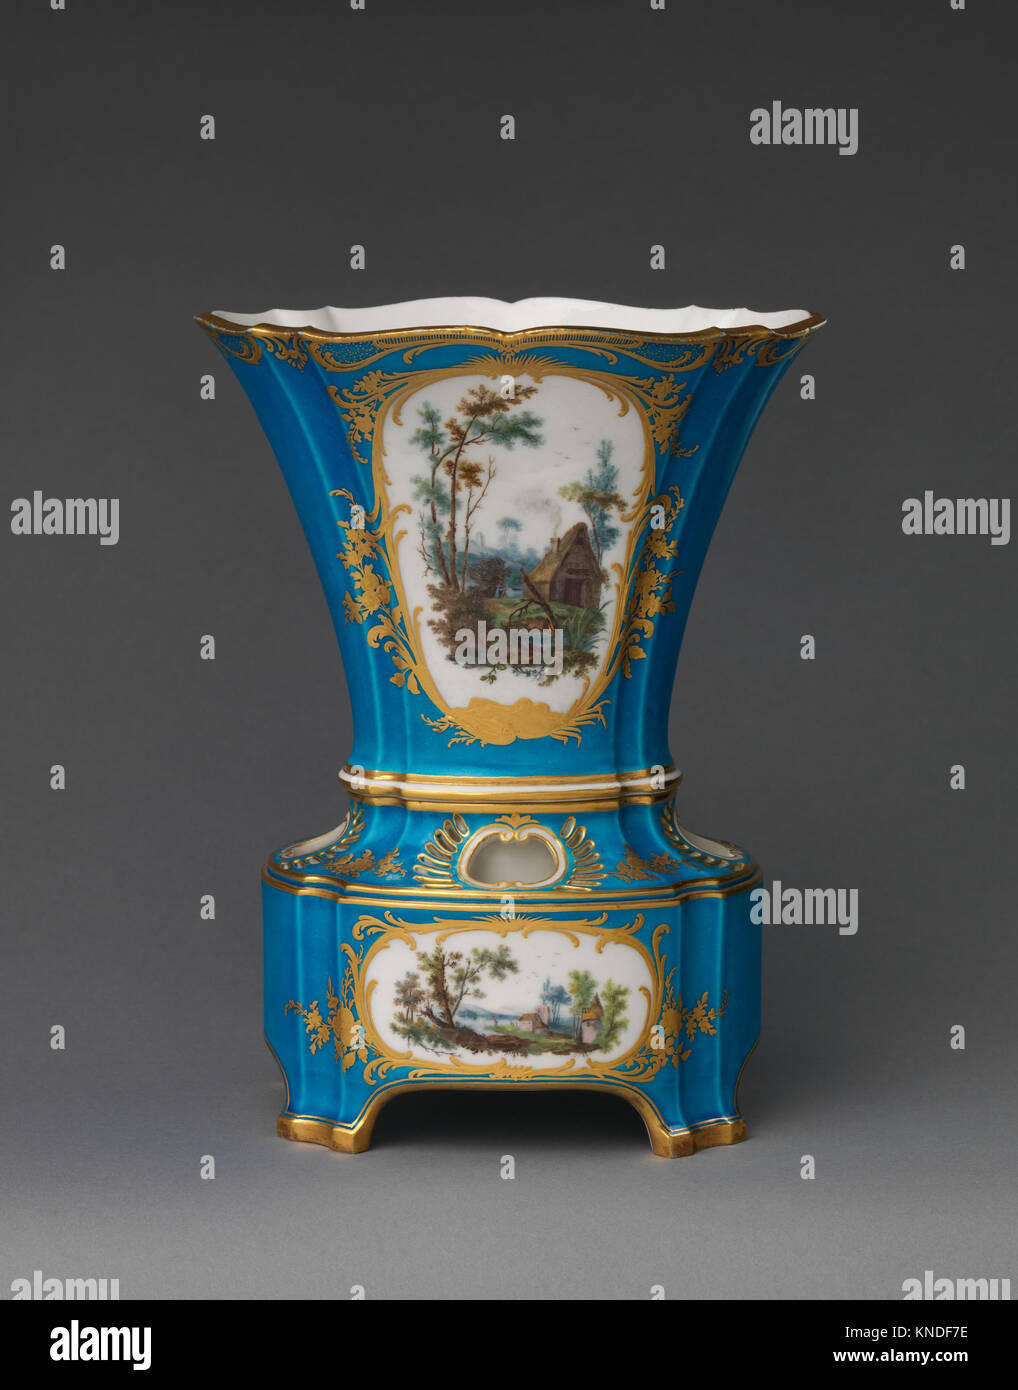 Vase nouveau vase hi-res stock photography and images - Page 6 - Alamy